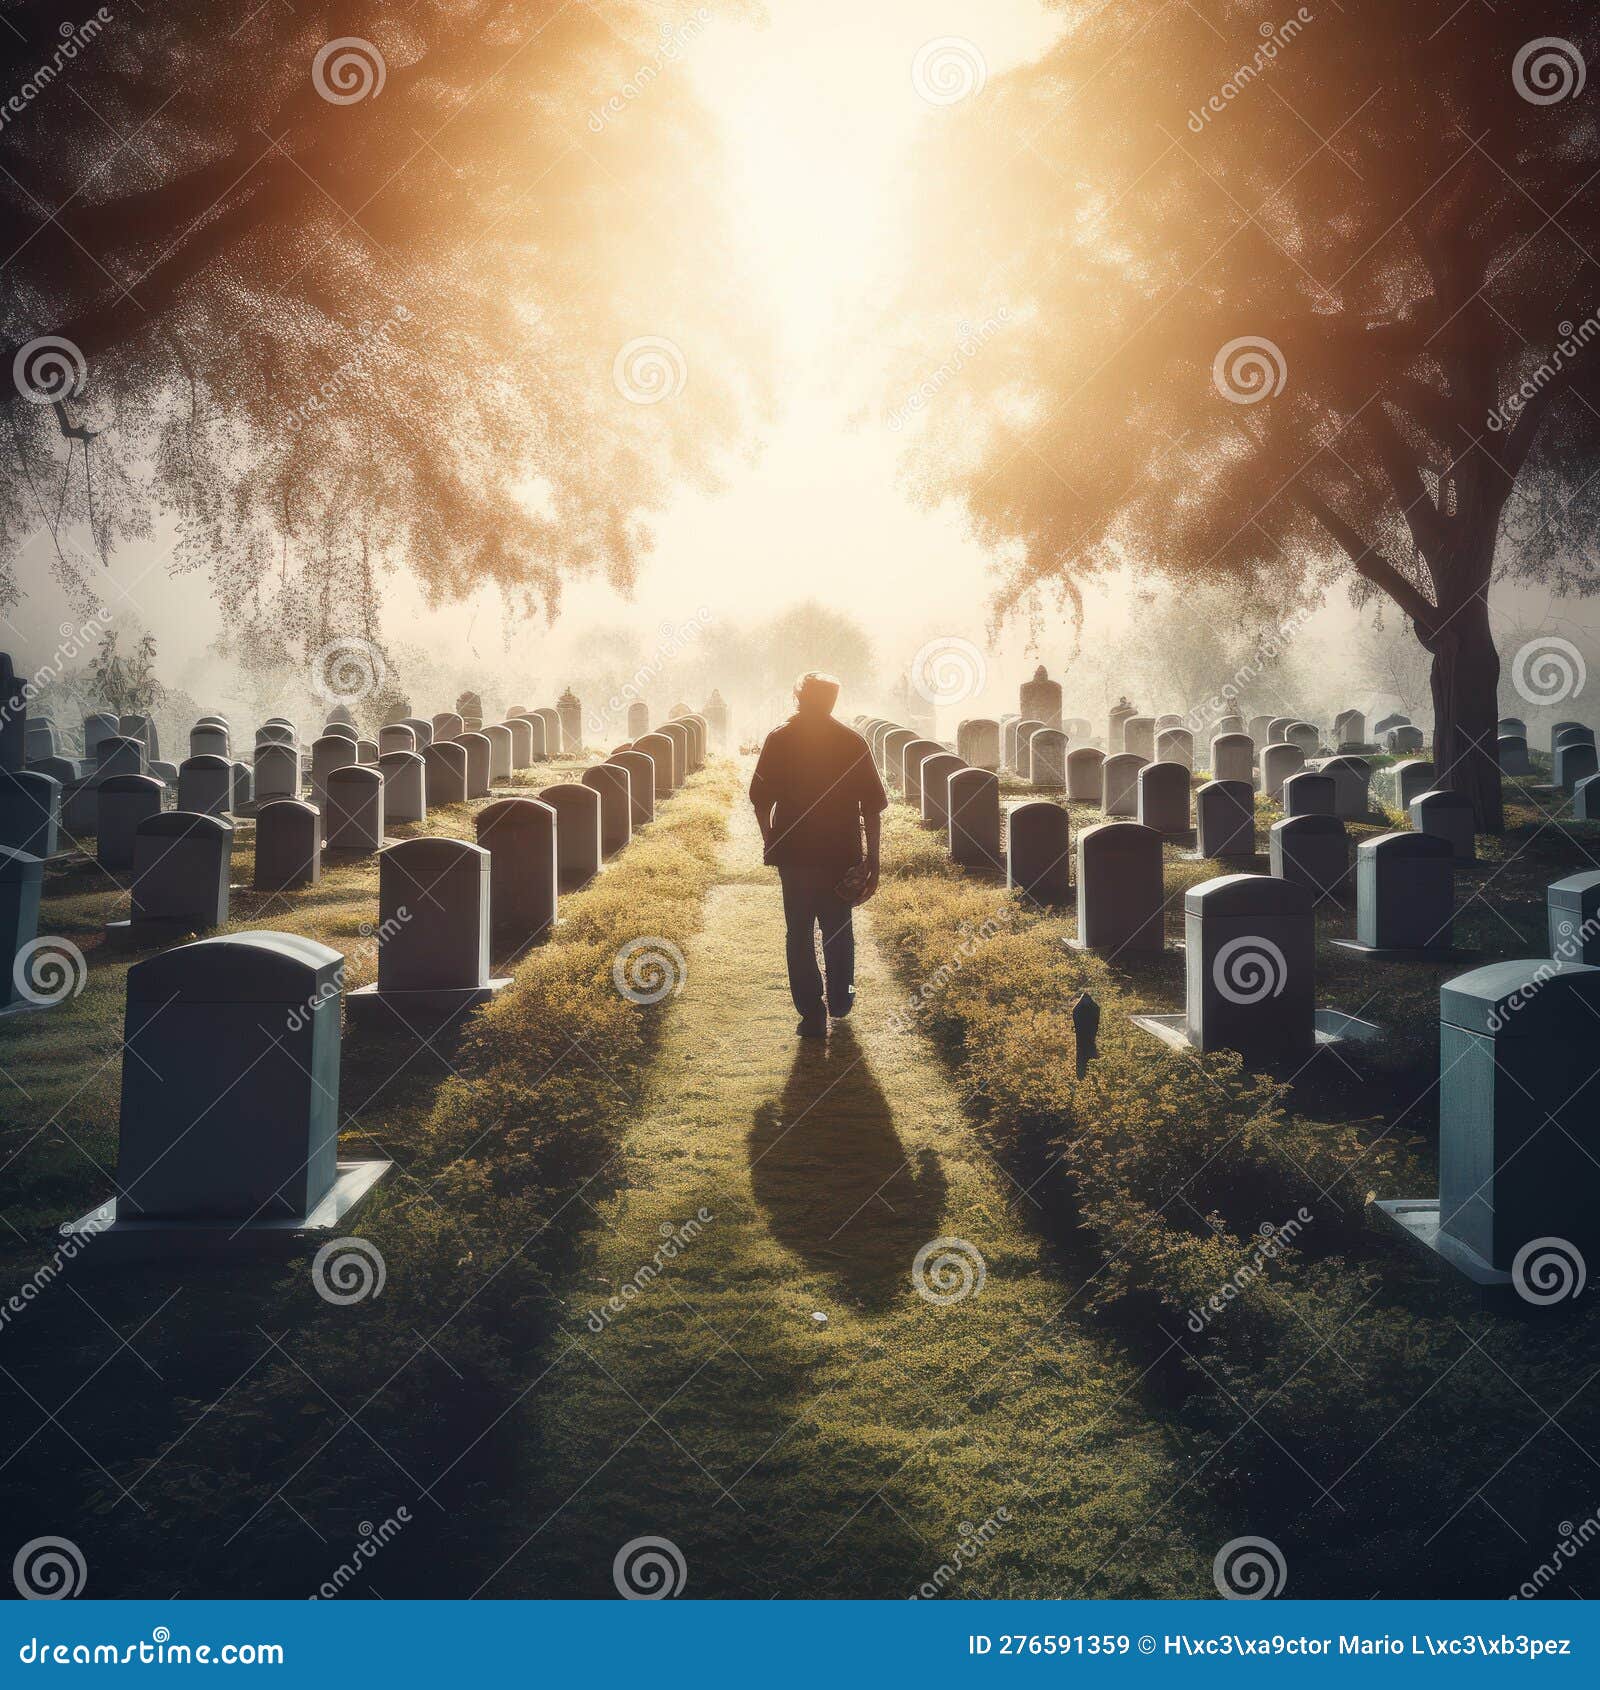 person walking through a cemetery